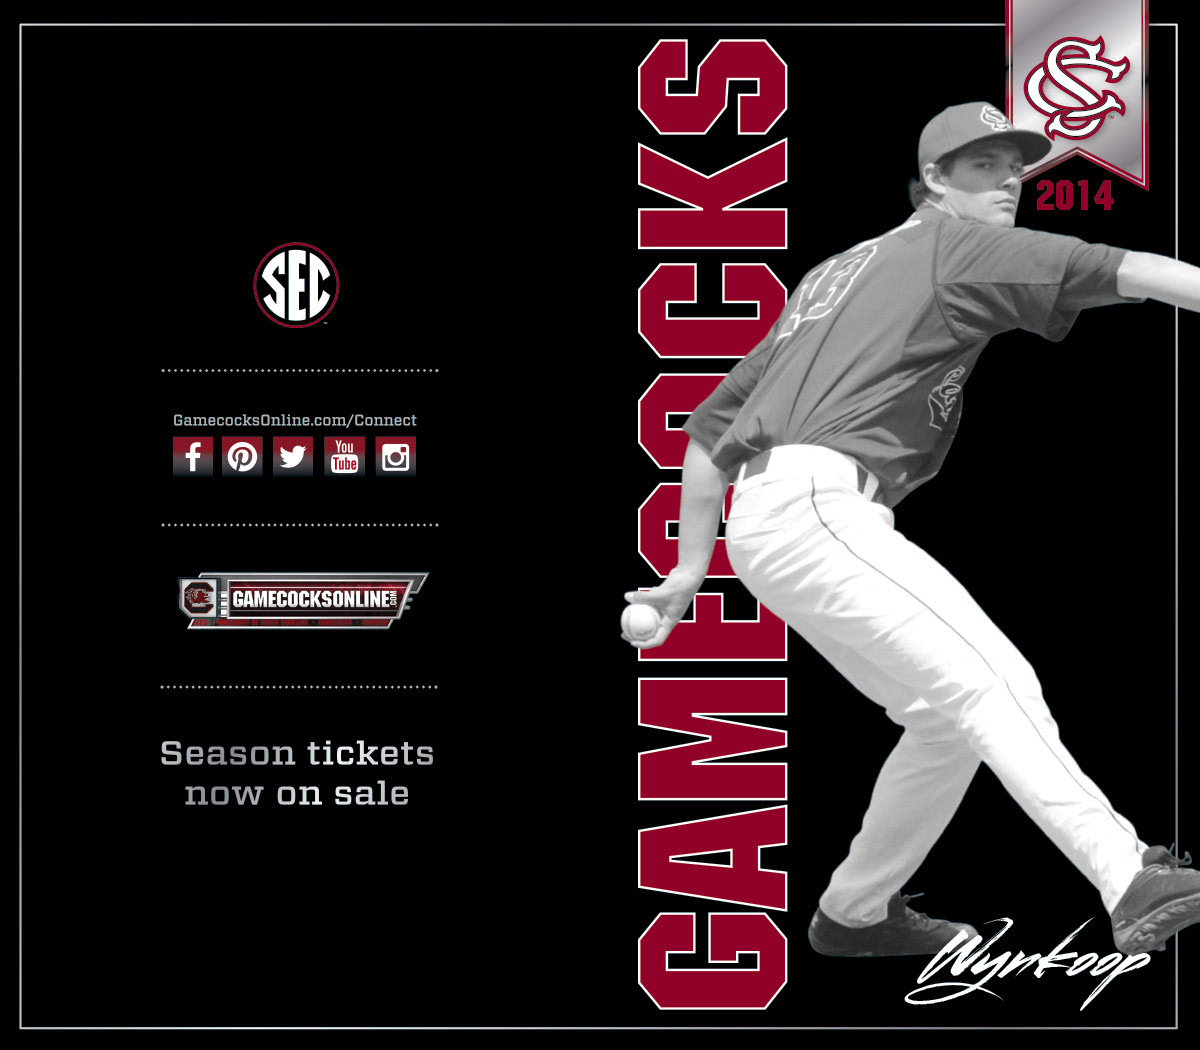 Black Barn University of South Carolina Baseball Schedule Cards